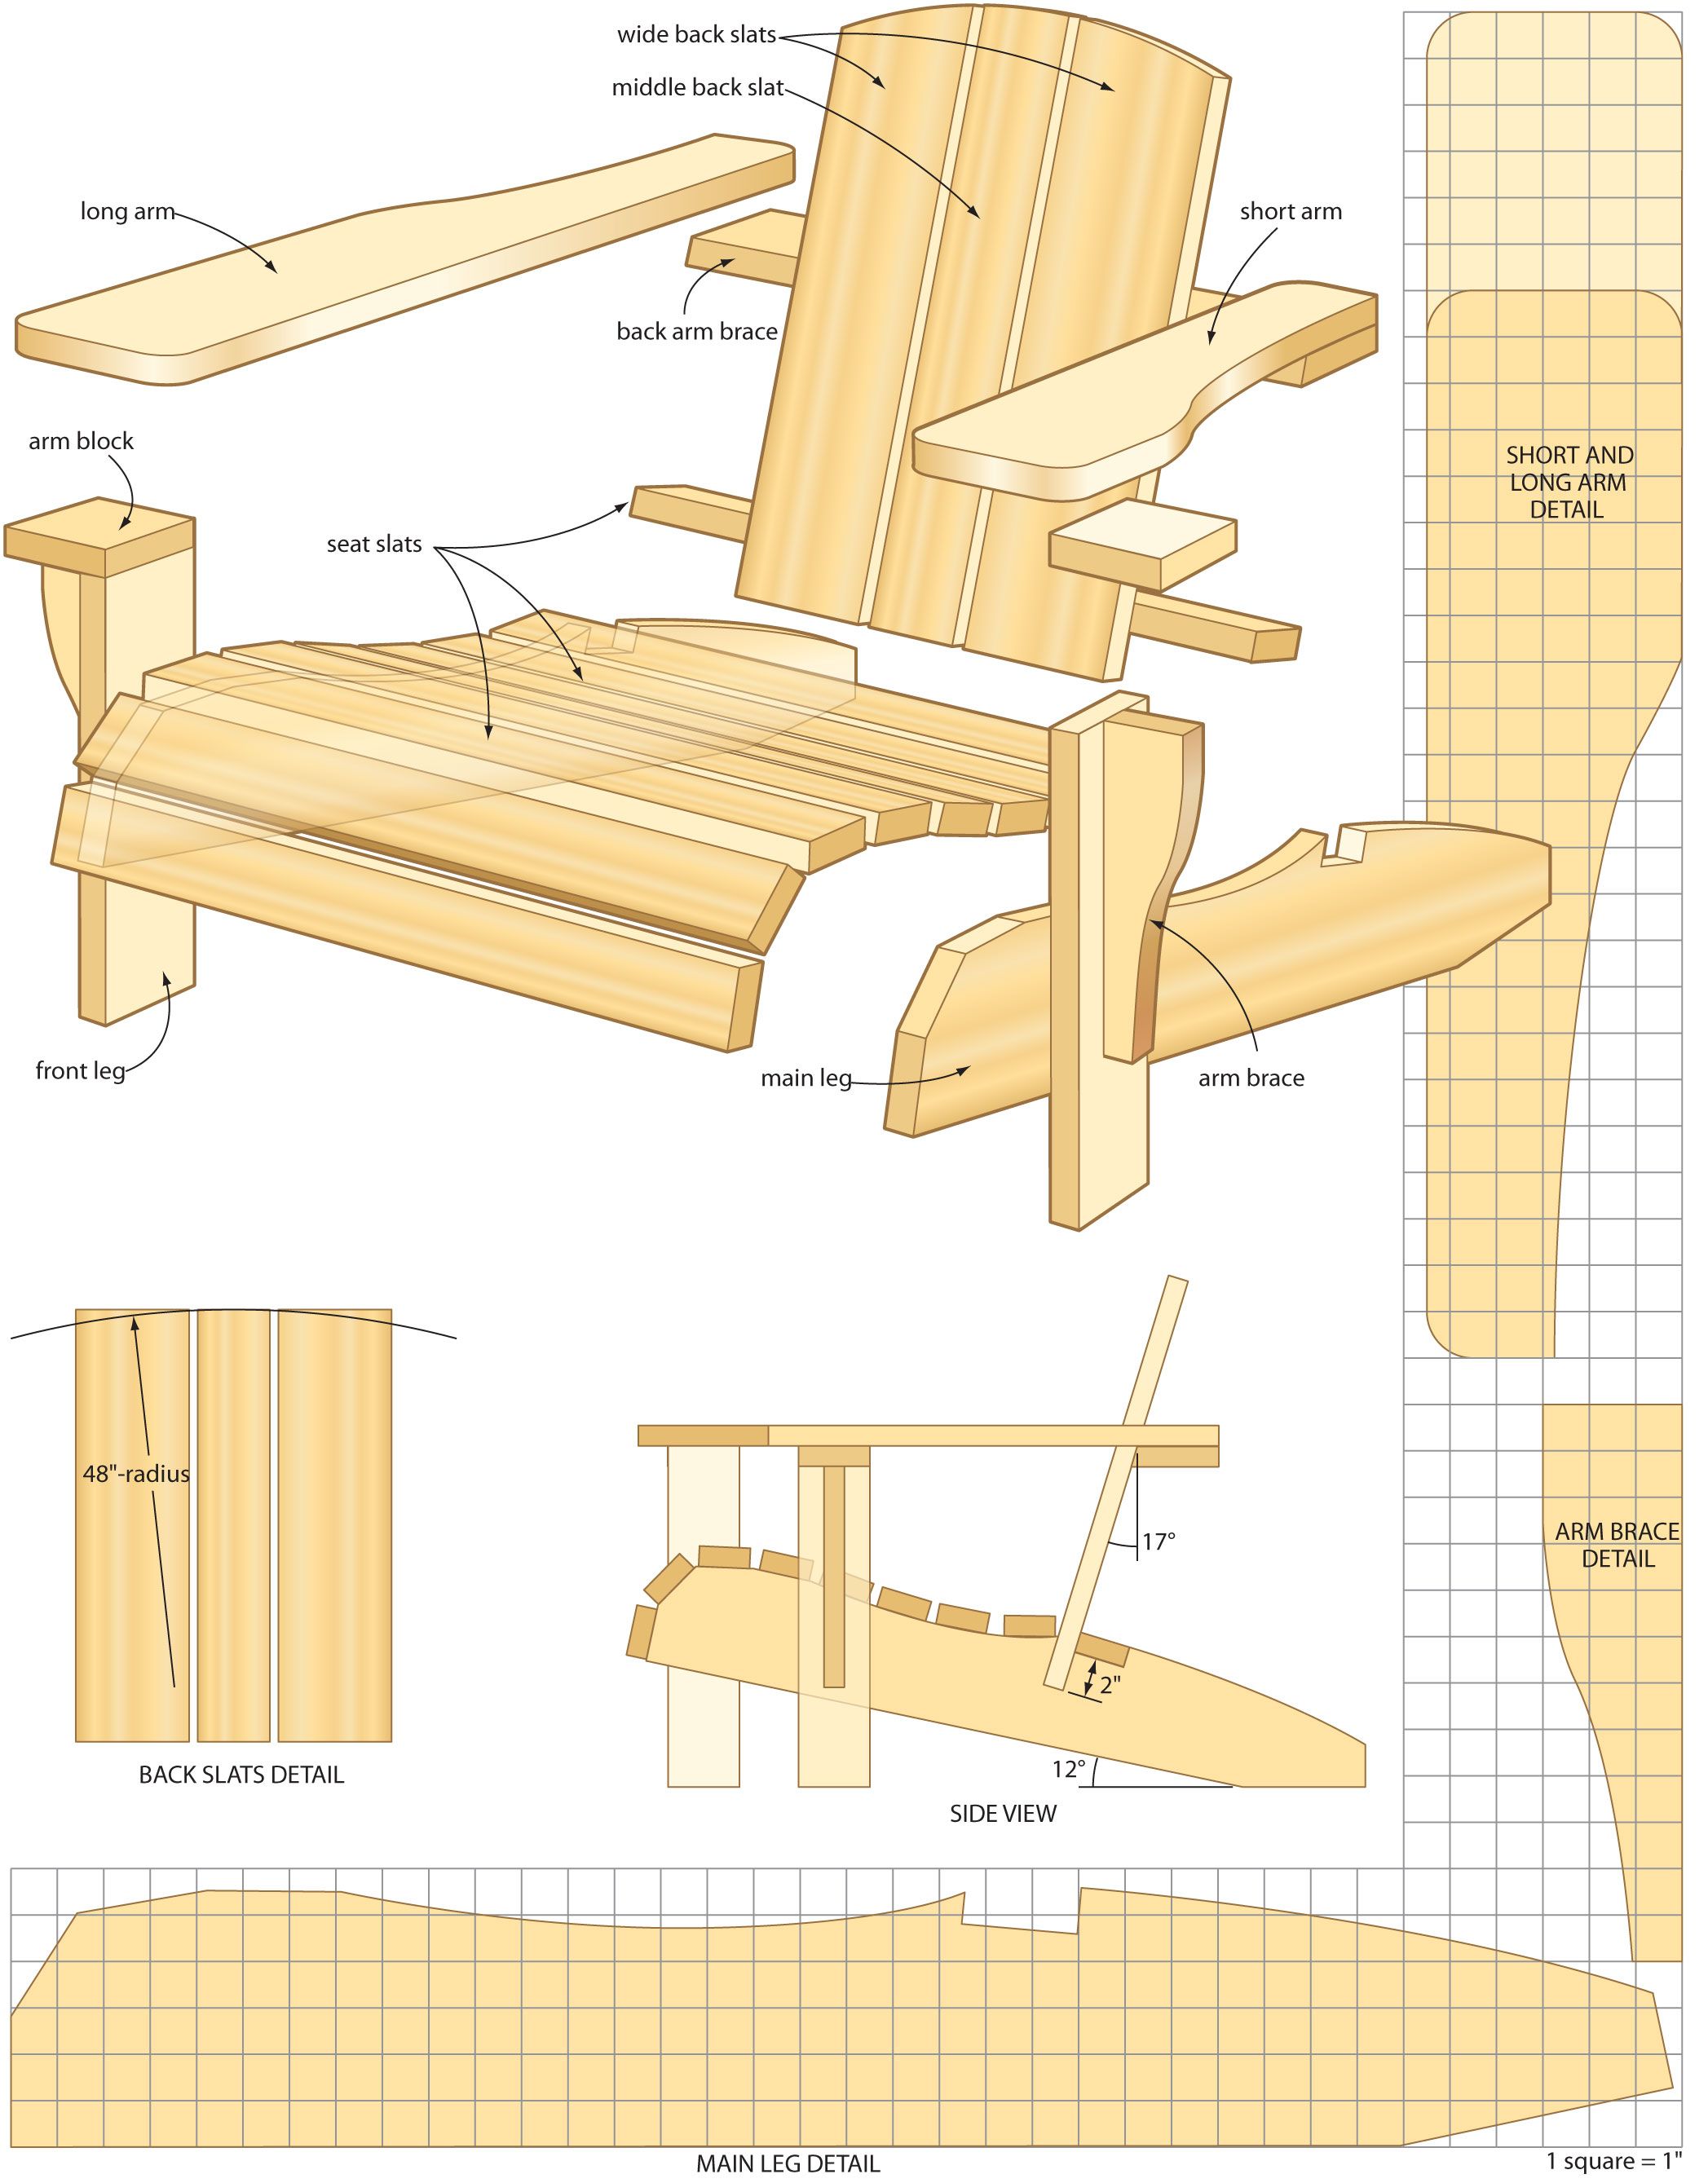 чертеж скамейки из дерева с размерами для дачи